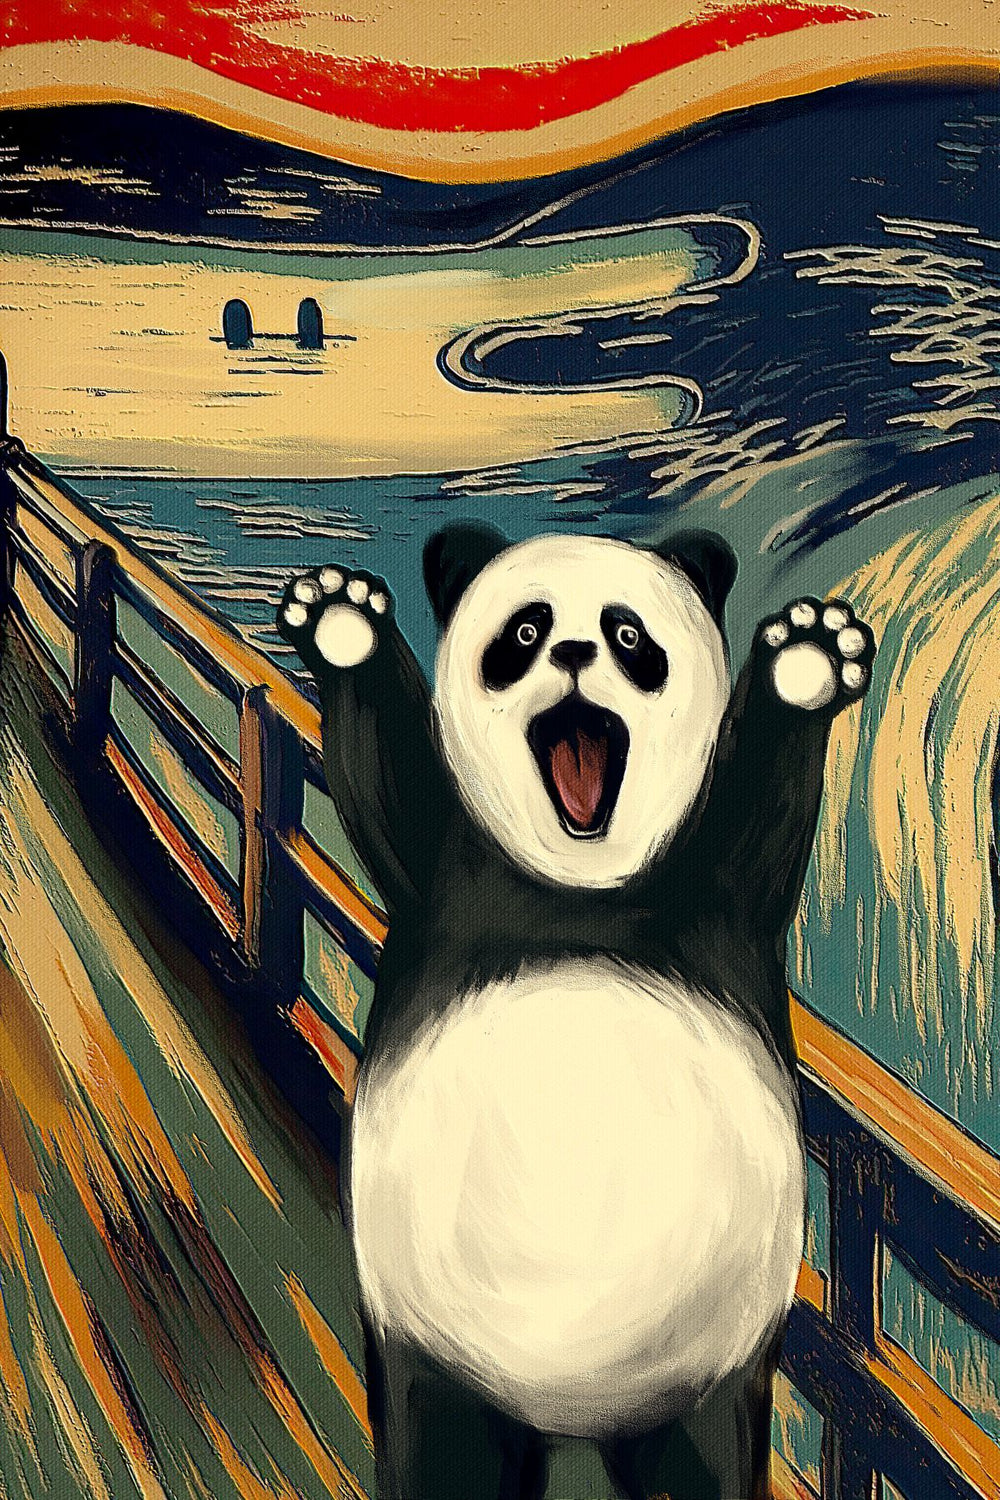 The Scream With Panda